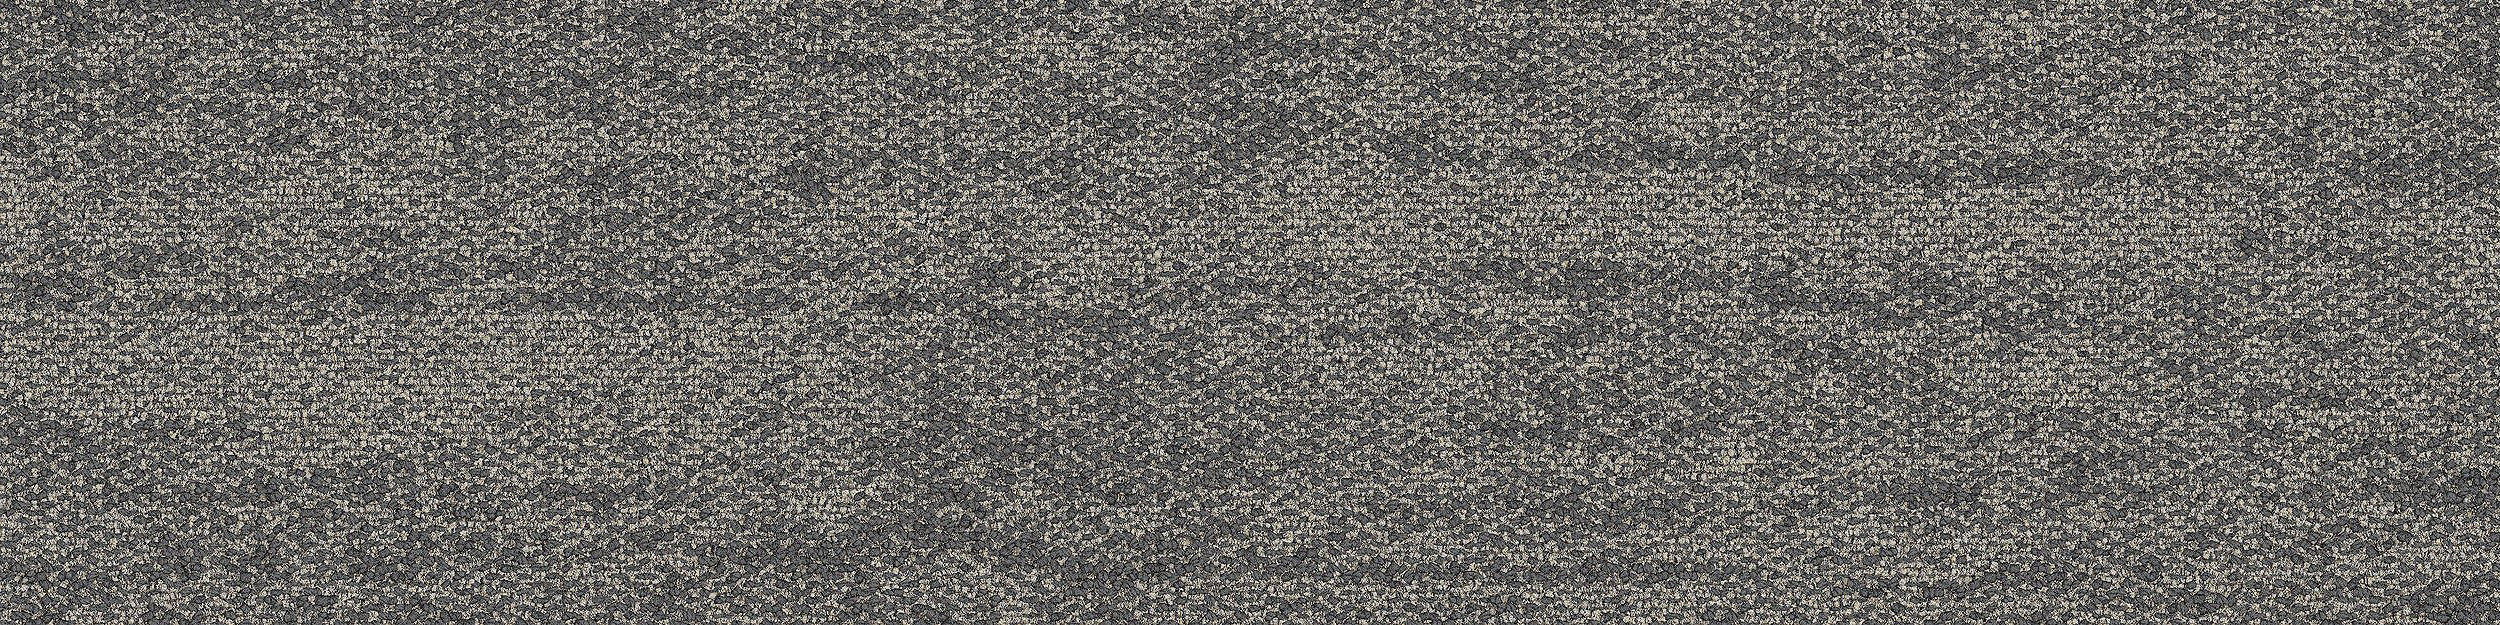 Open Air 402 Carpet Tile In Nickel image number 6